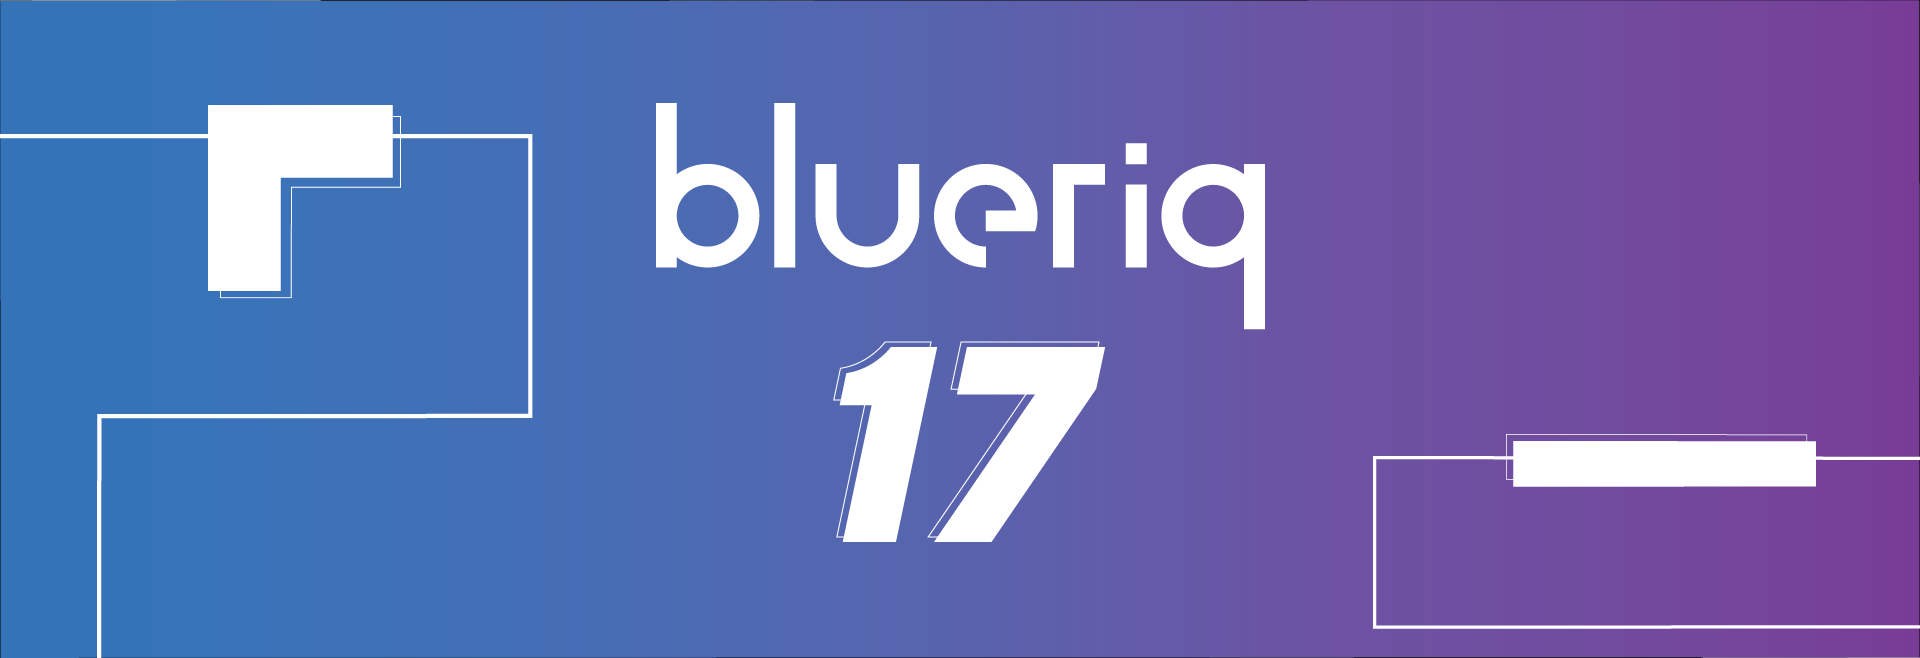 Blueriq 17 banner